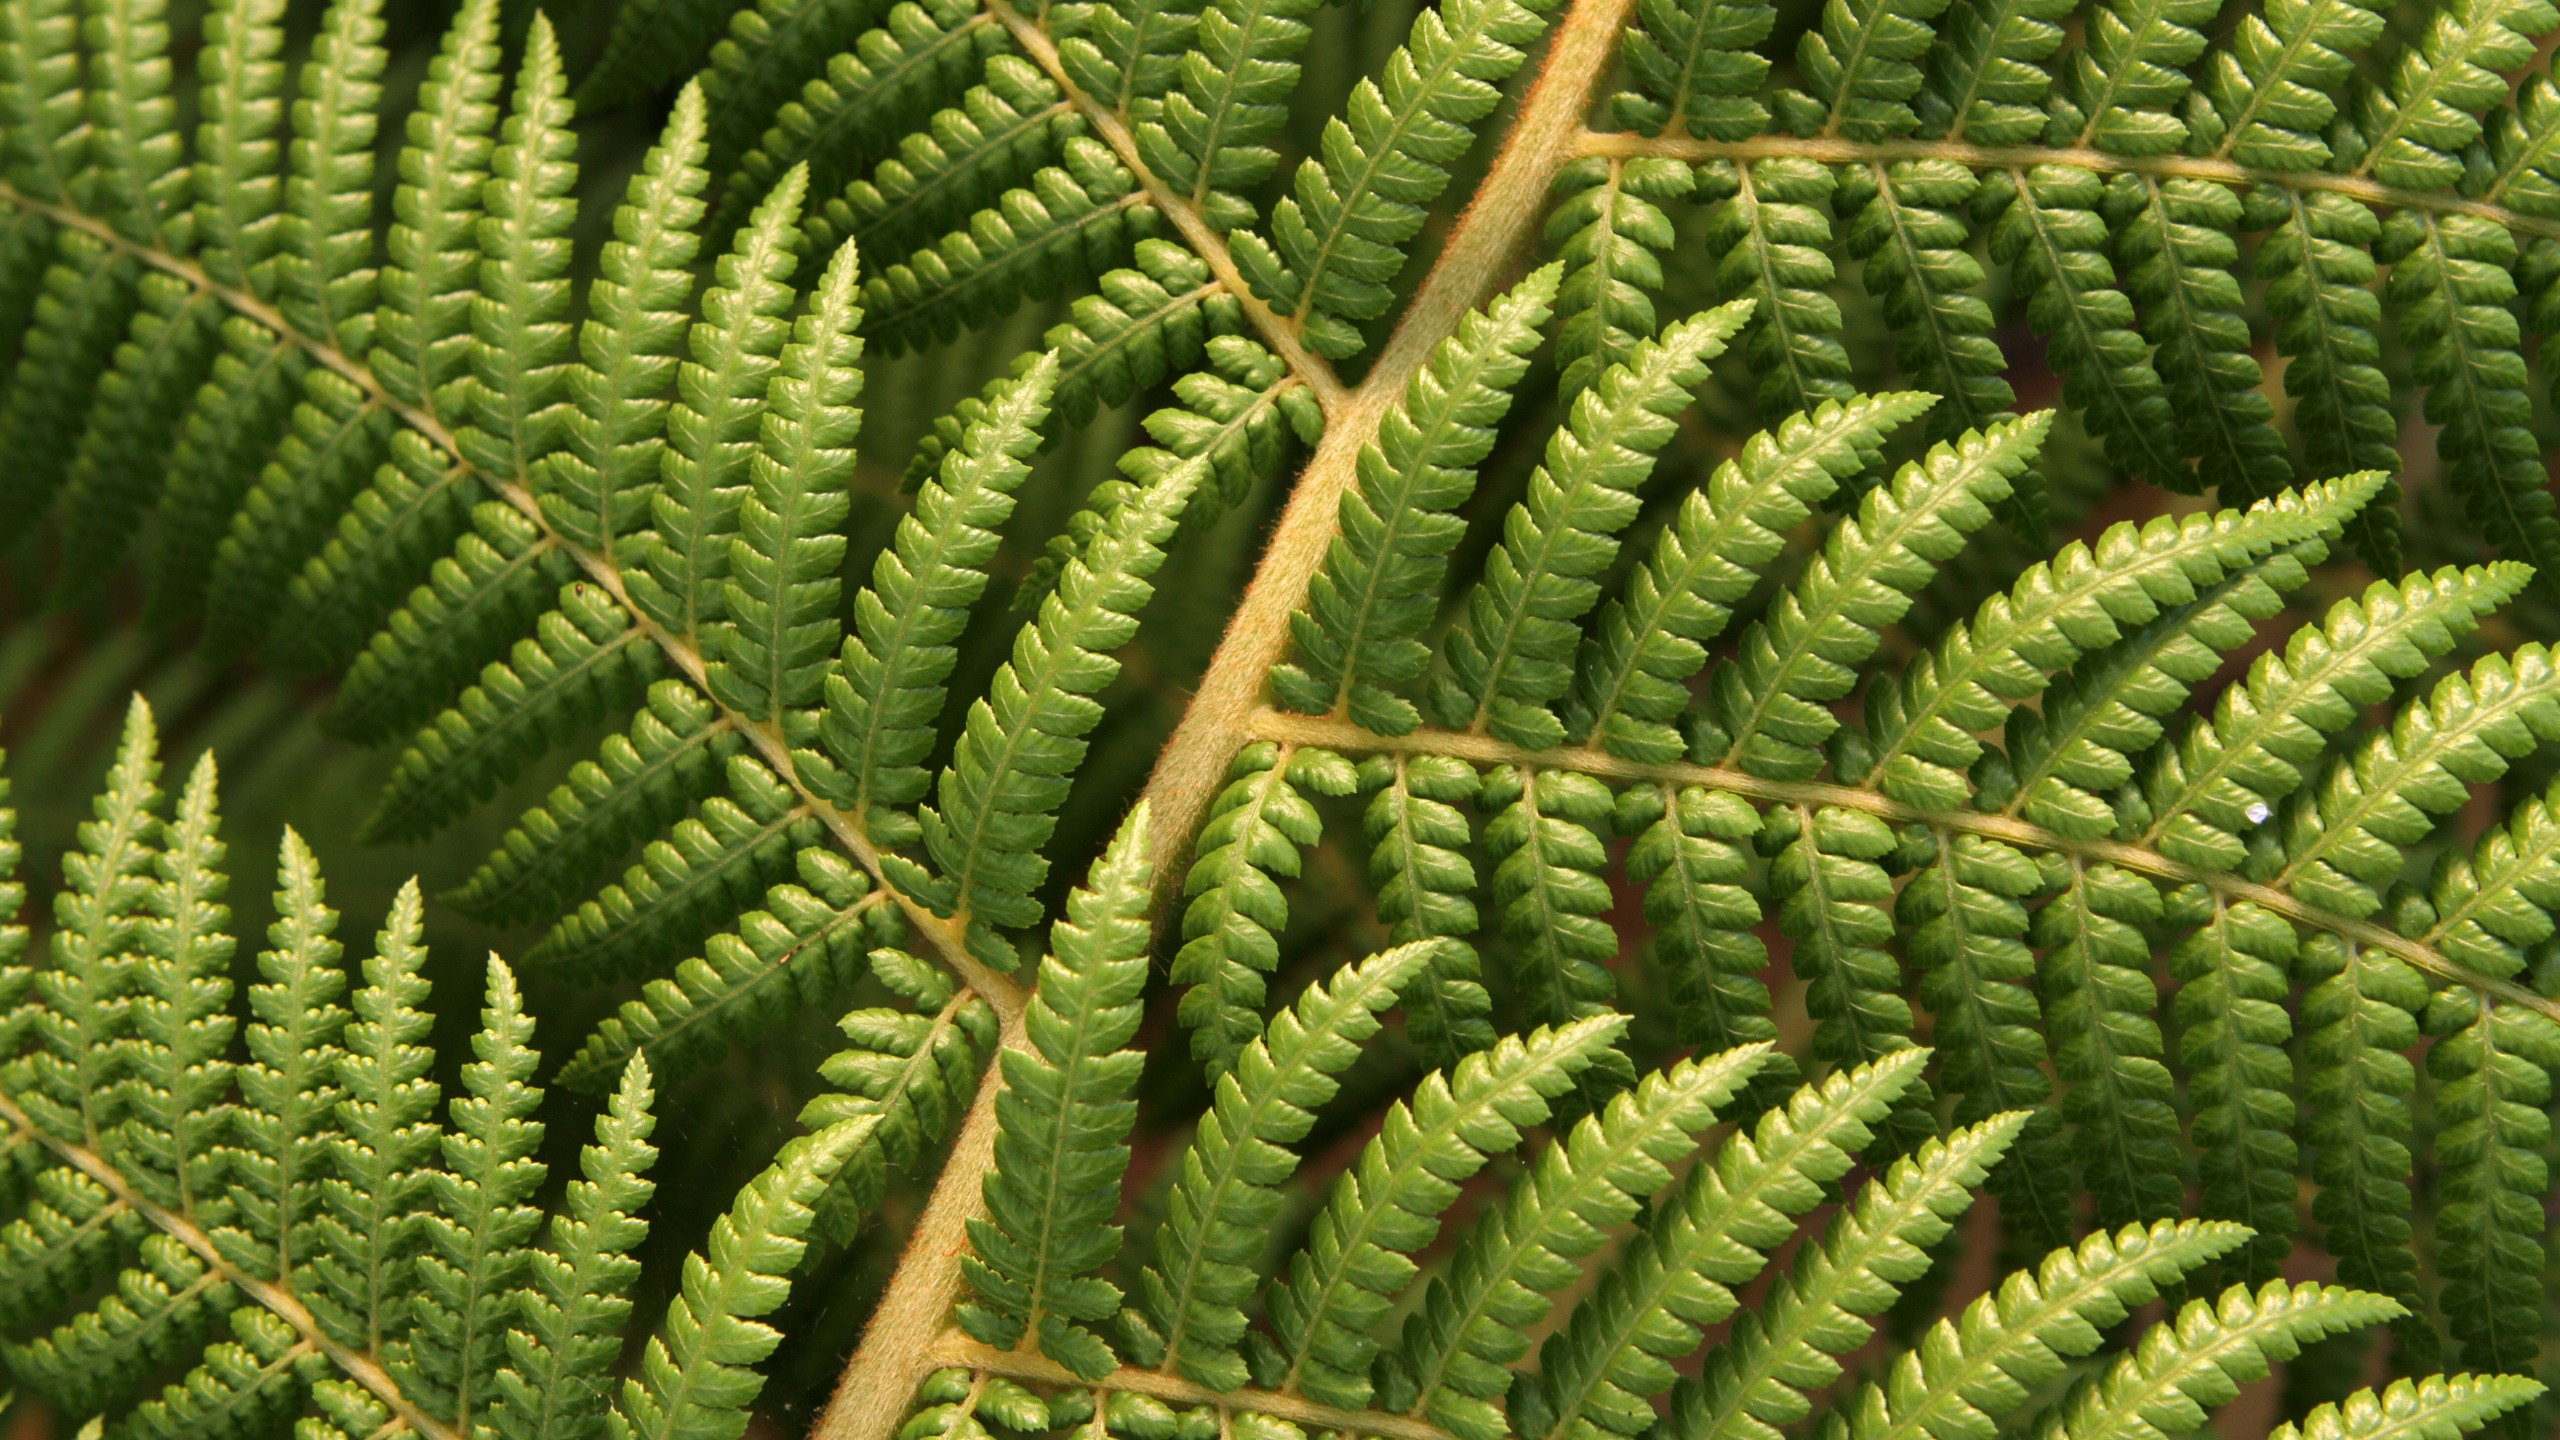 General 2560x1440 plants ferns macro nature leaves green